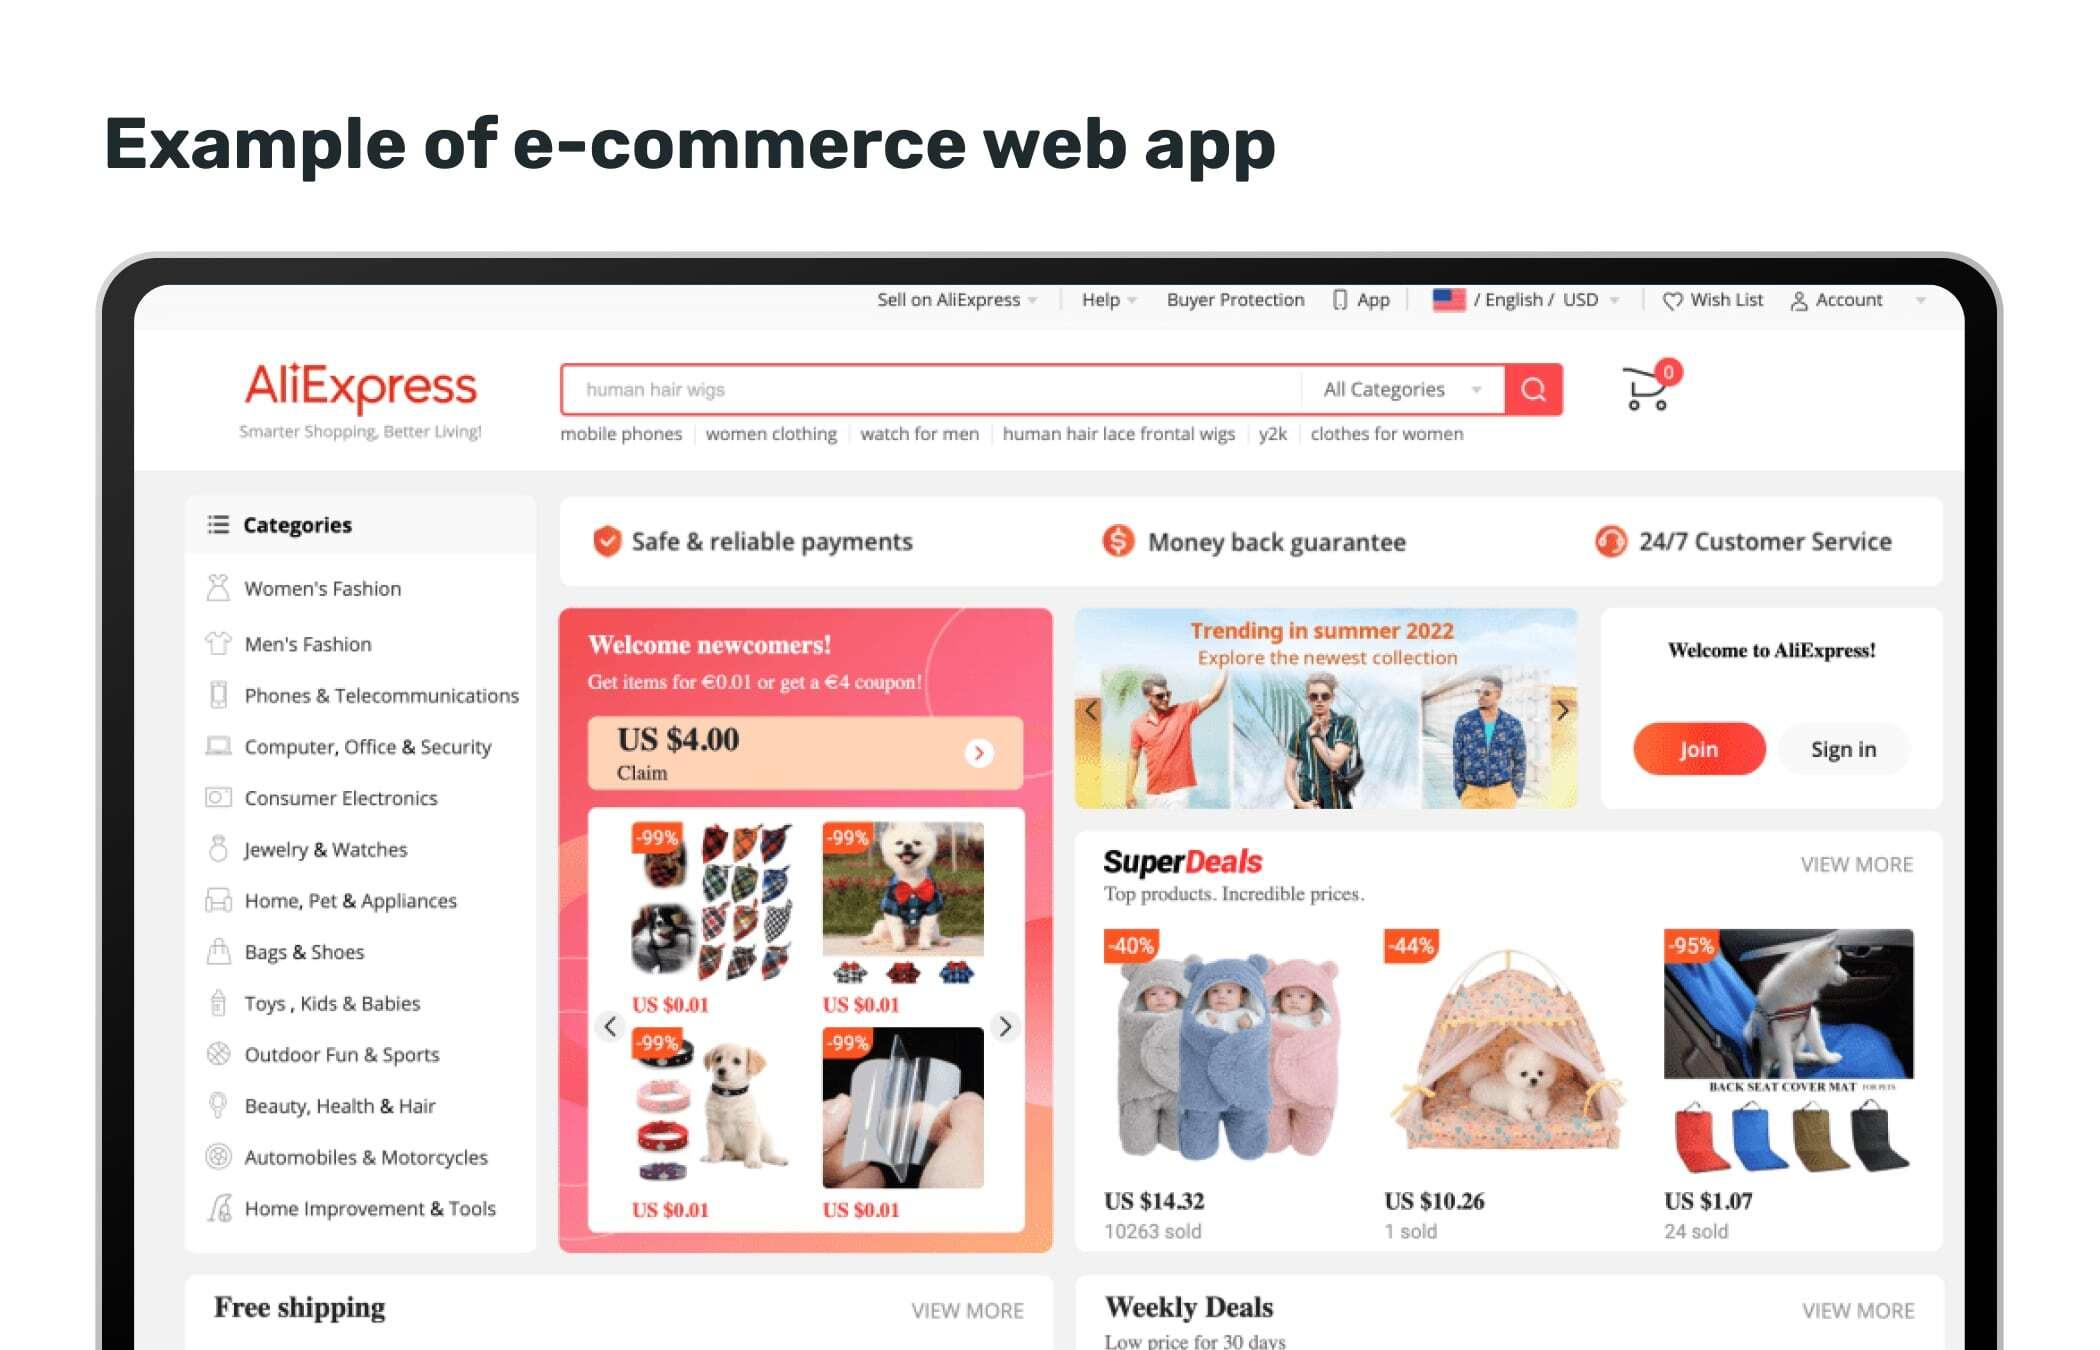 E-commerce web app